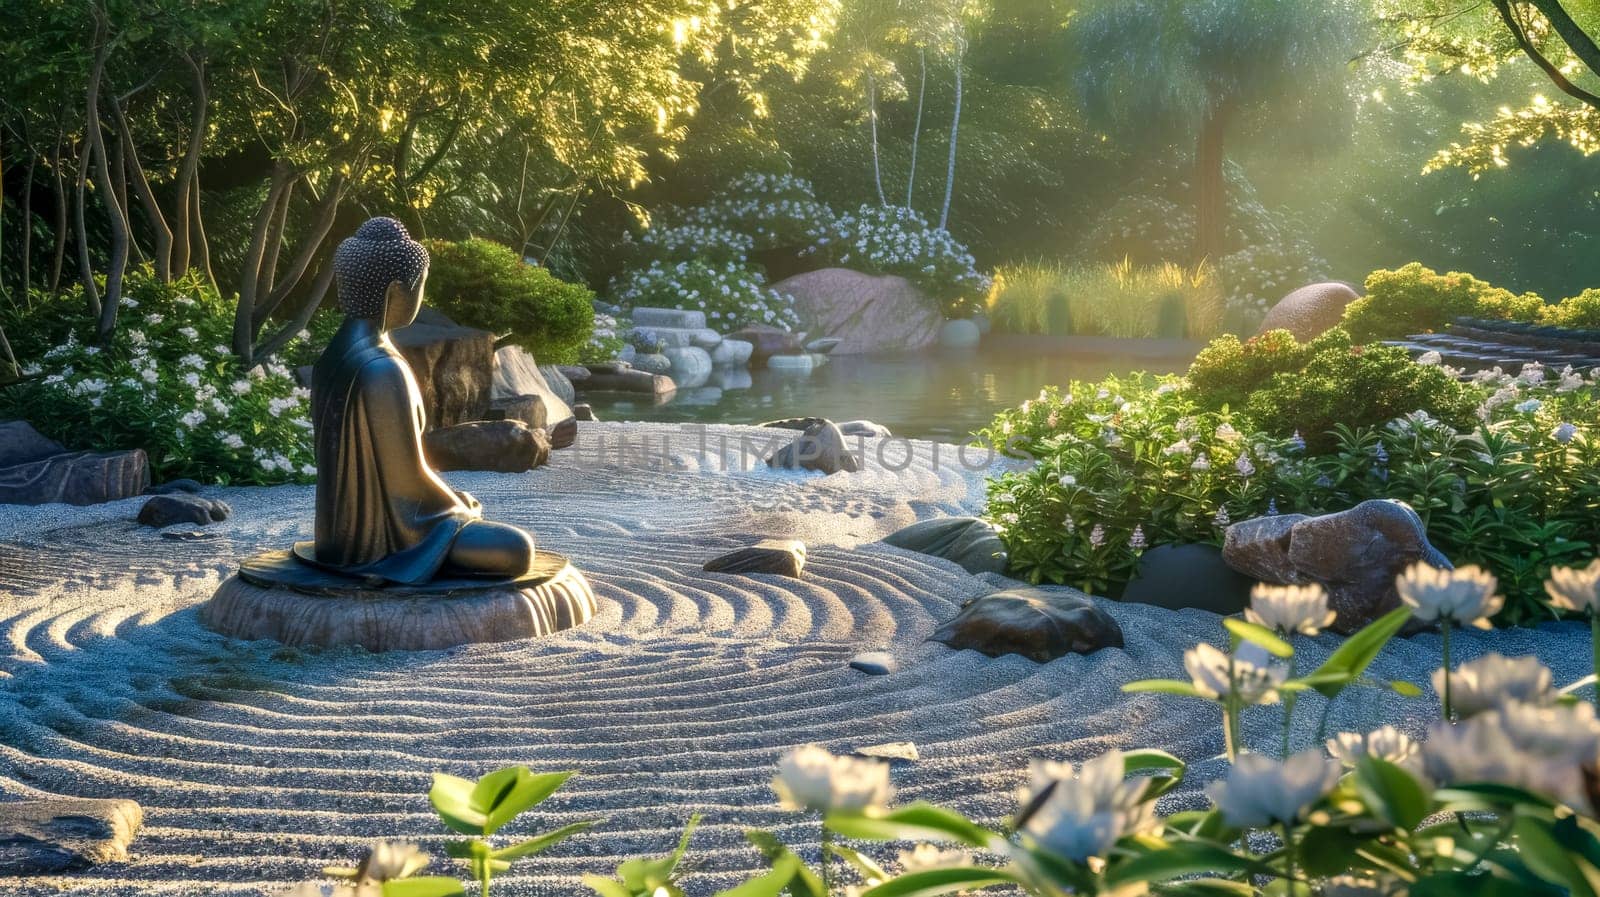 Tranquil zen garden at sunrise by Edophoto